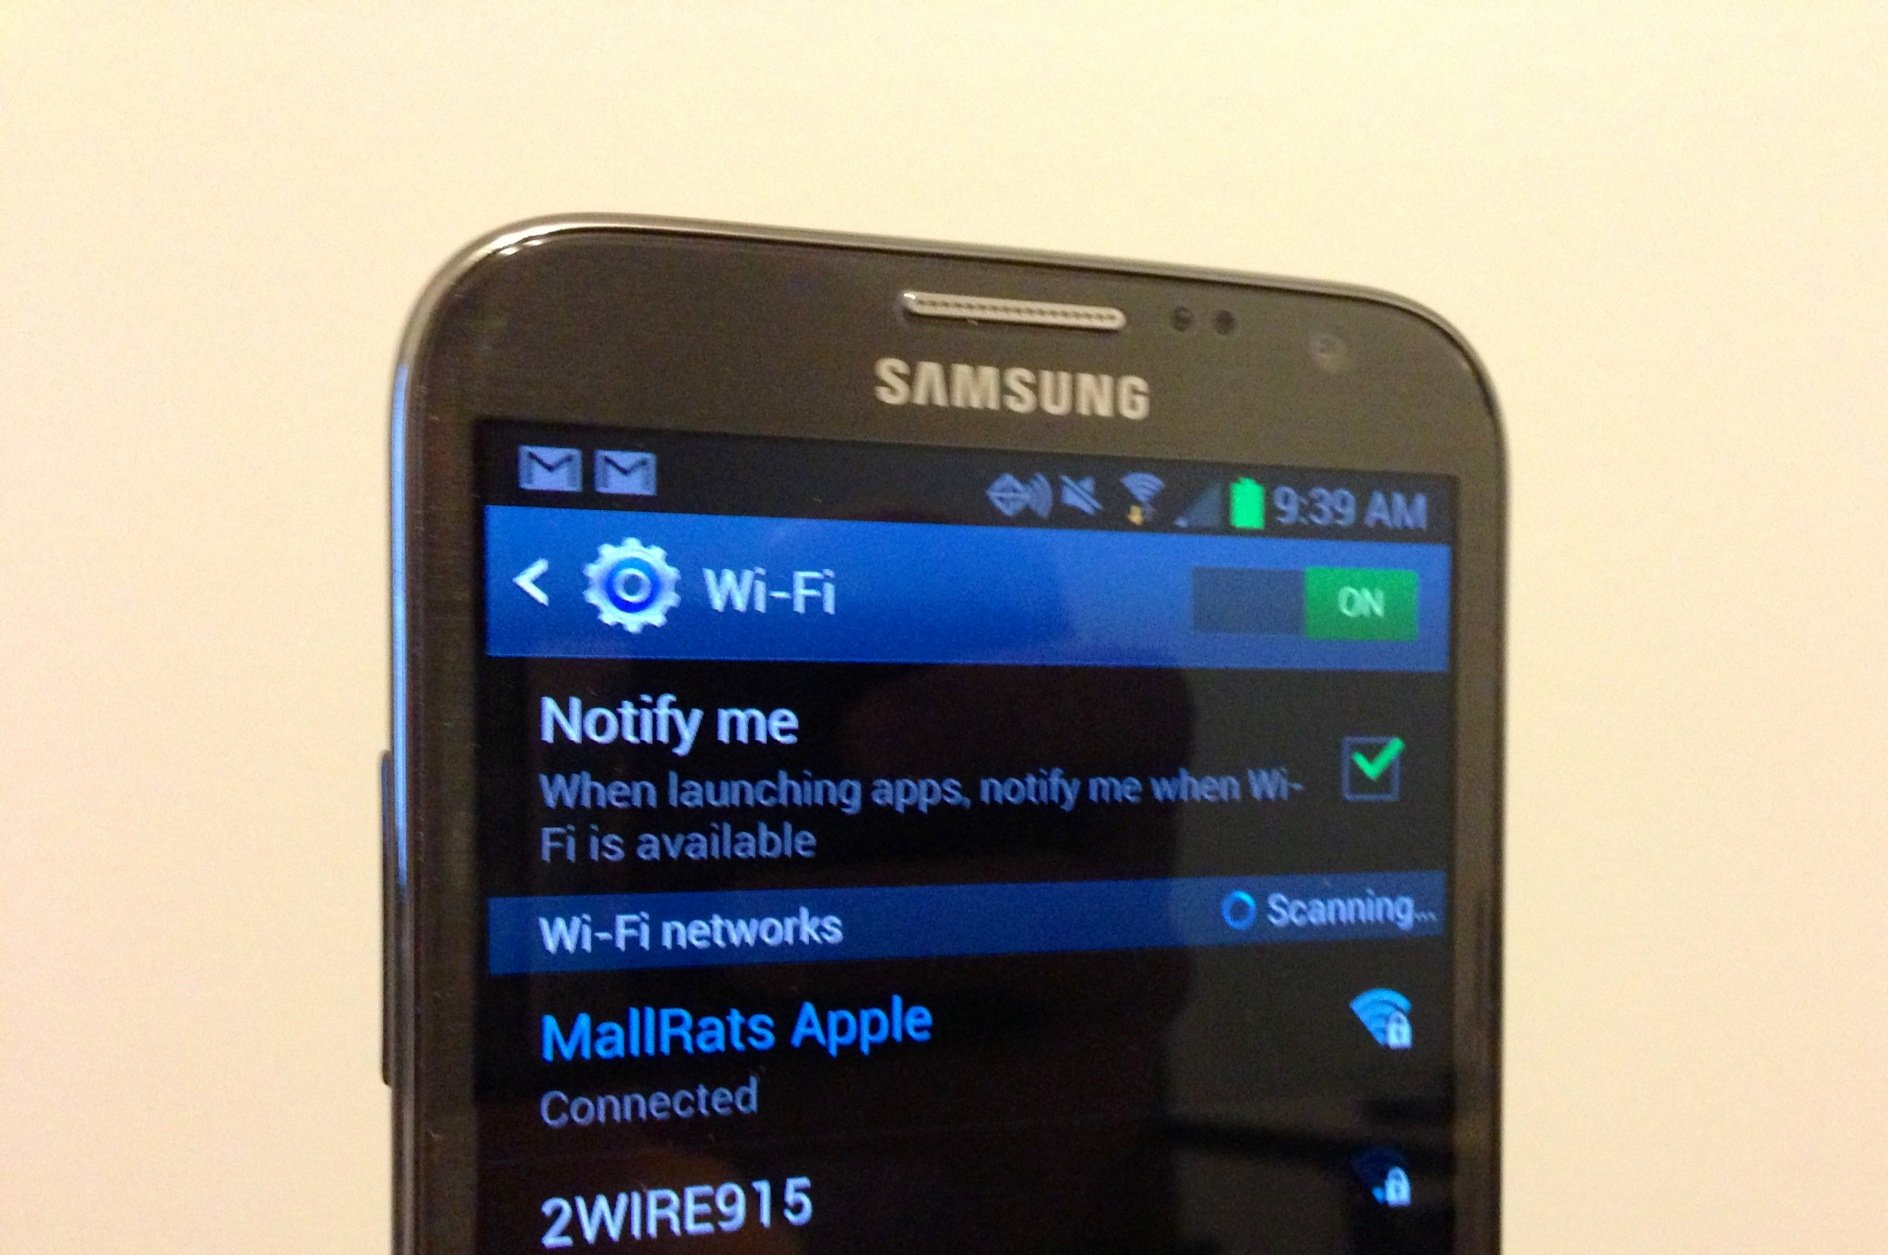 Galaxy Note 2 WiFi Problems